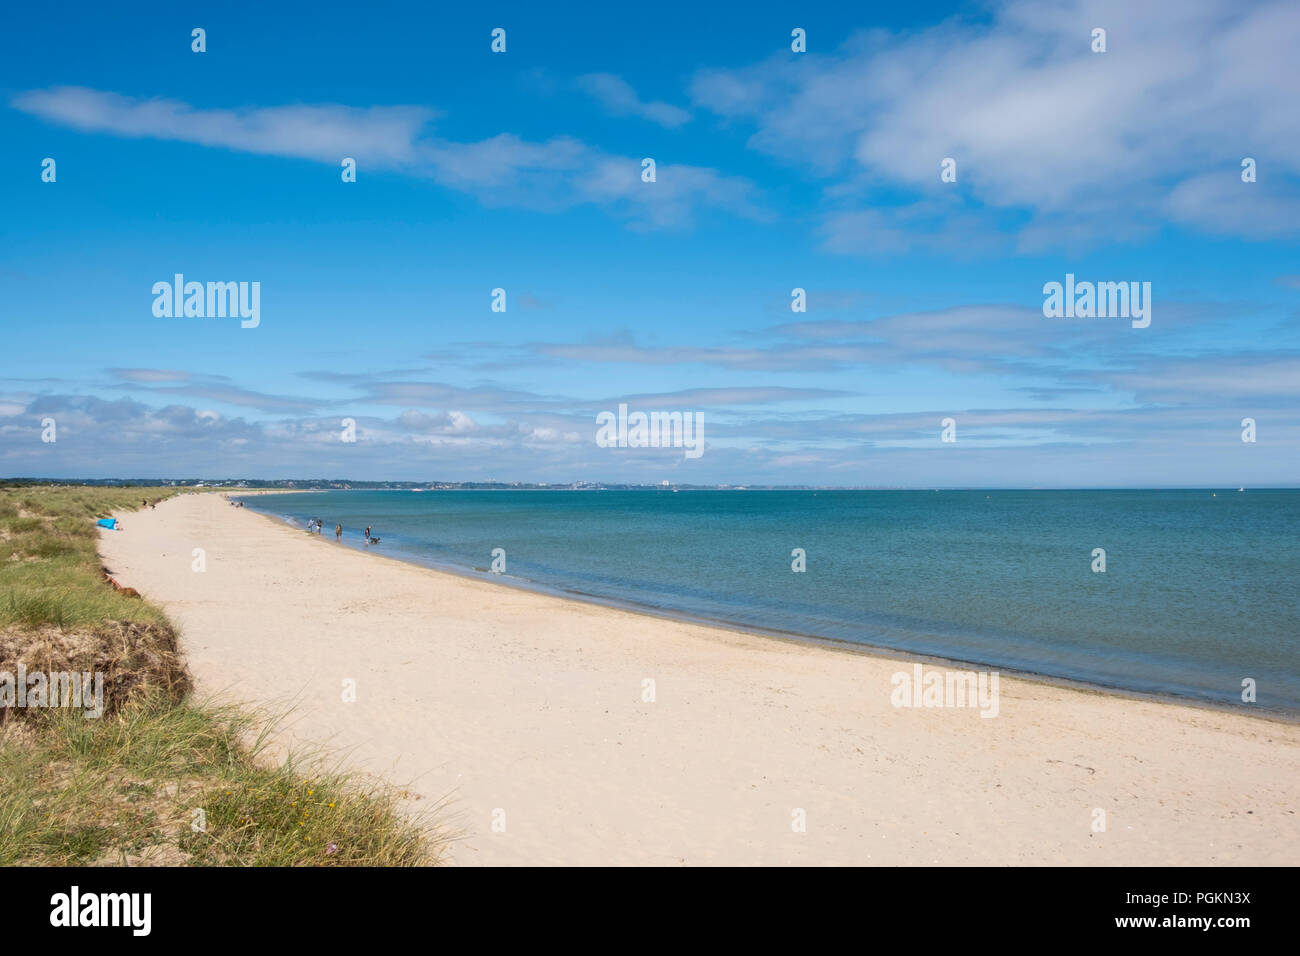 A view of the beach at Studland Bay, Jurassic Coast, Dorset, UK Stock Photo